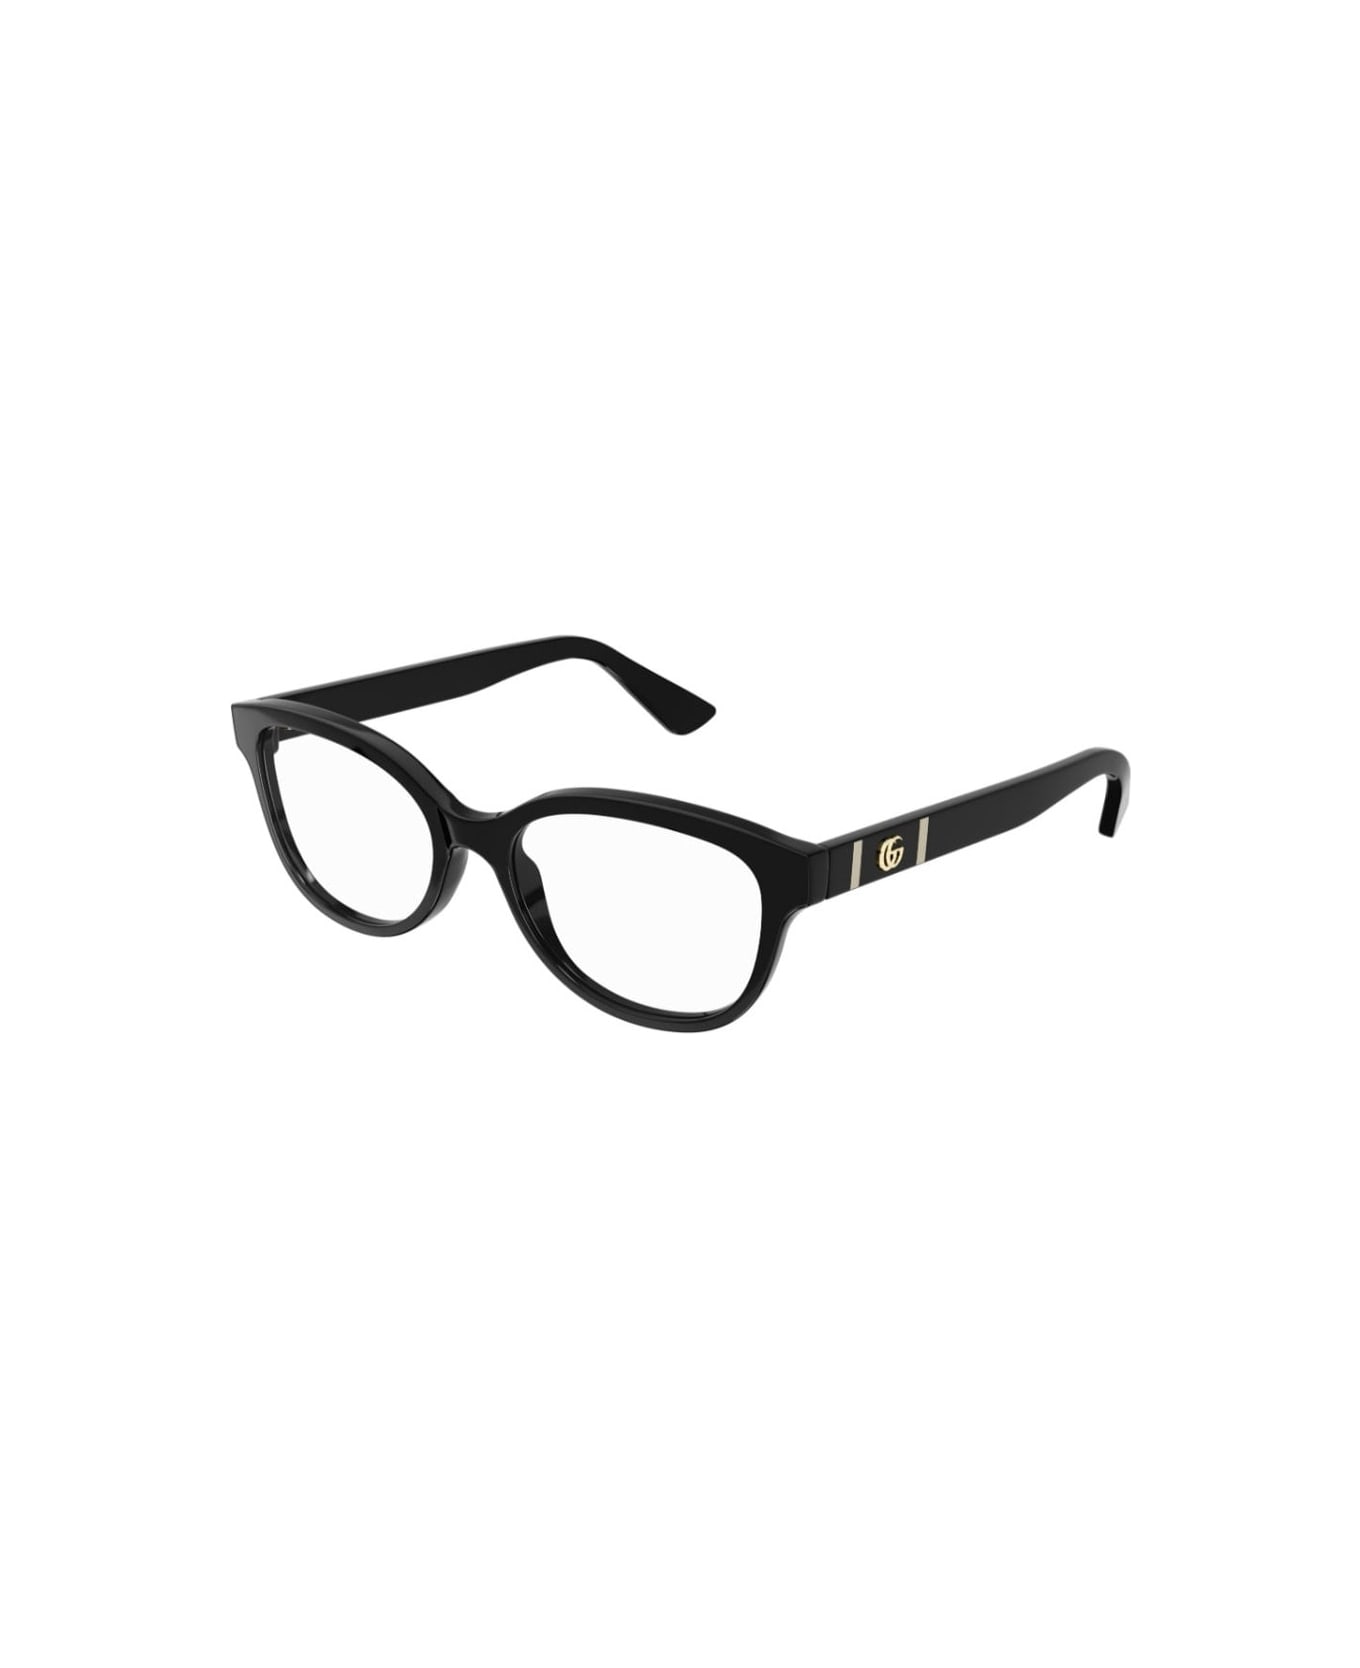 Gucci Eyewear GG1115 001 Glasses - Nero